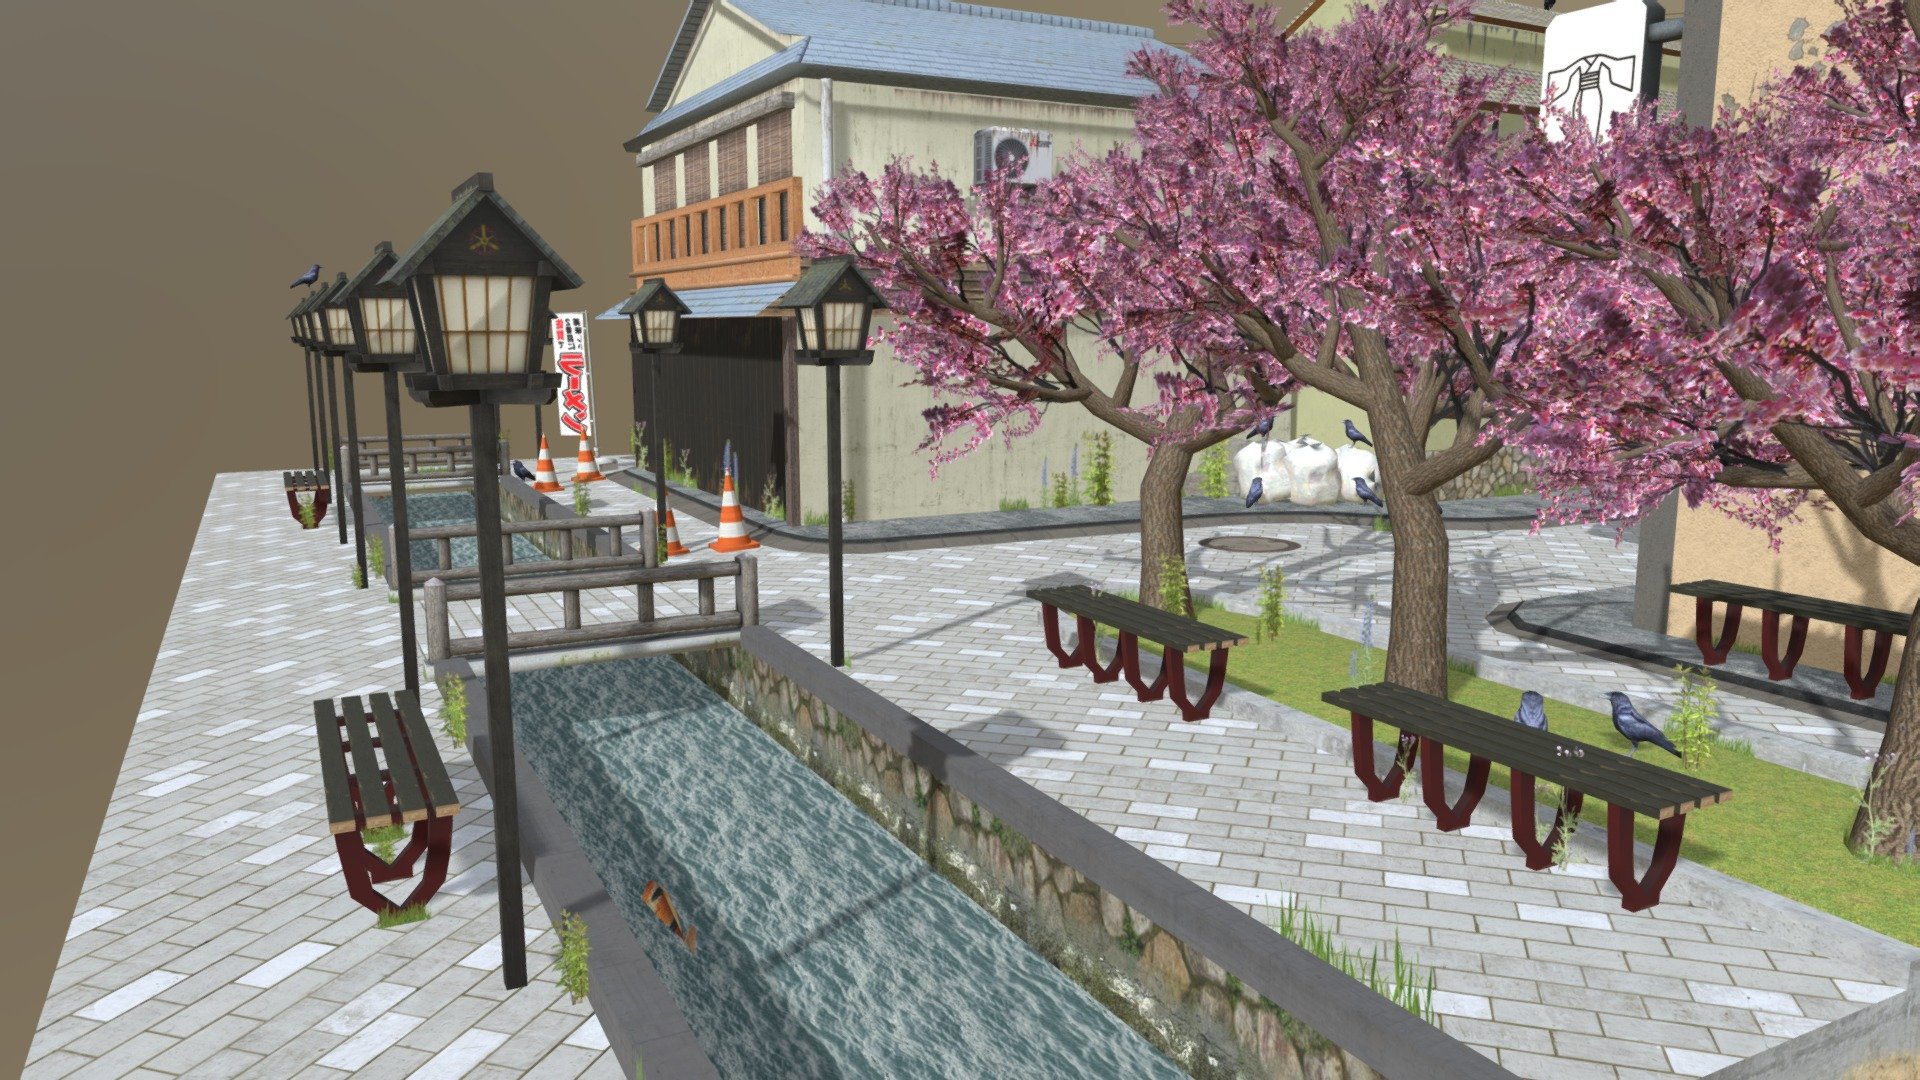 Kyoto CityScene
3 Buildings, Vehicle, Shopping Street - Kyoto_CityScene_Wilhelm_Guse - 3D model by willi.guse 3d model